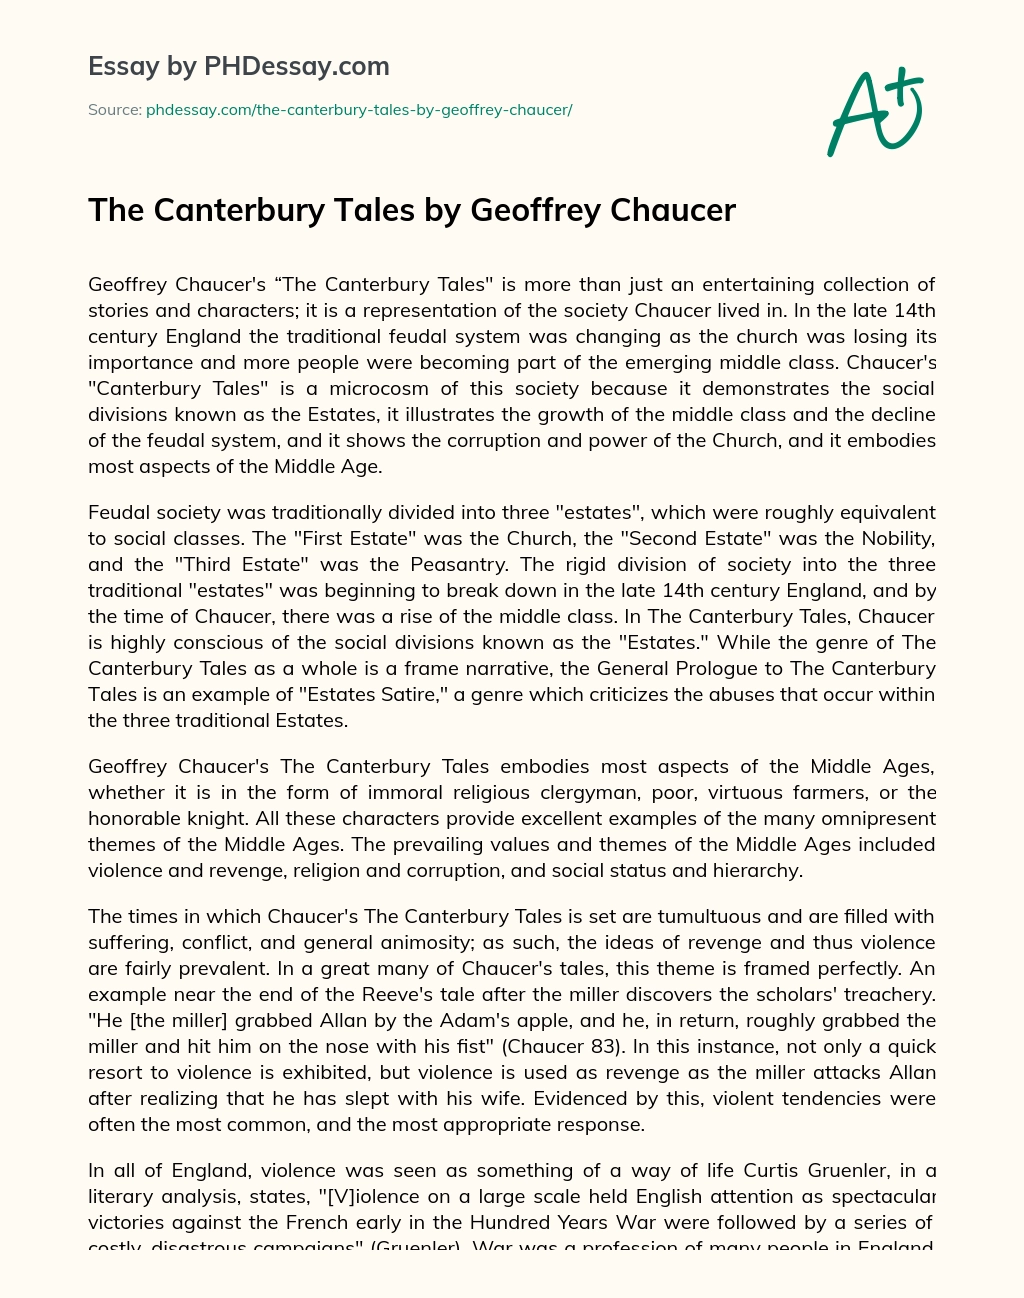 The Canterbury Tales by Geoffrey Chaucer essay